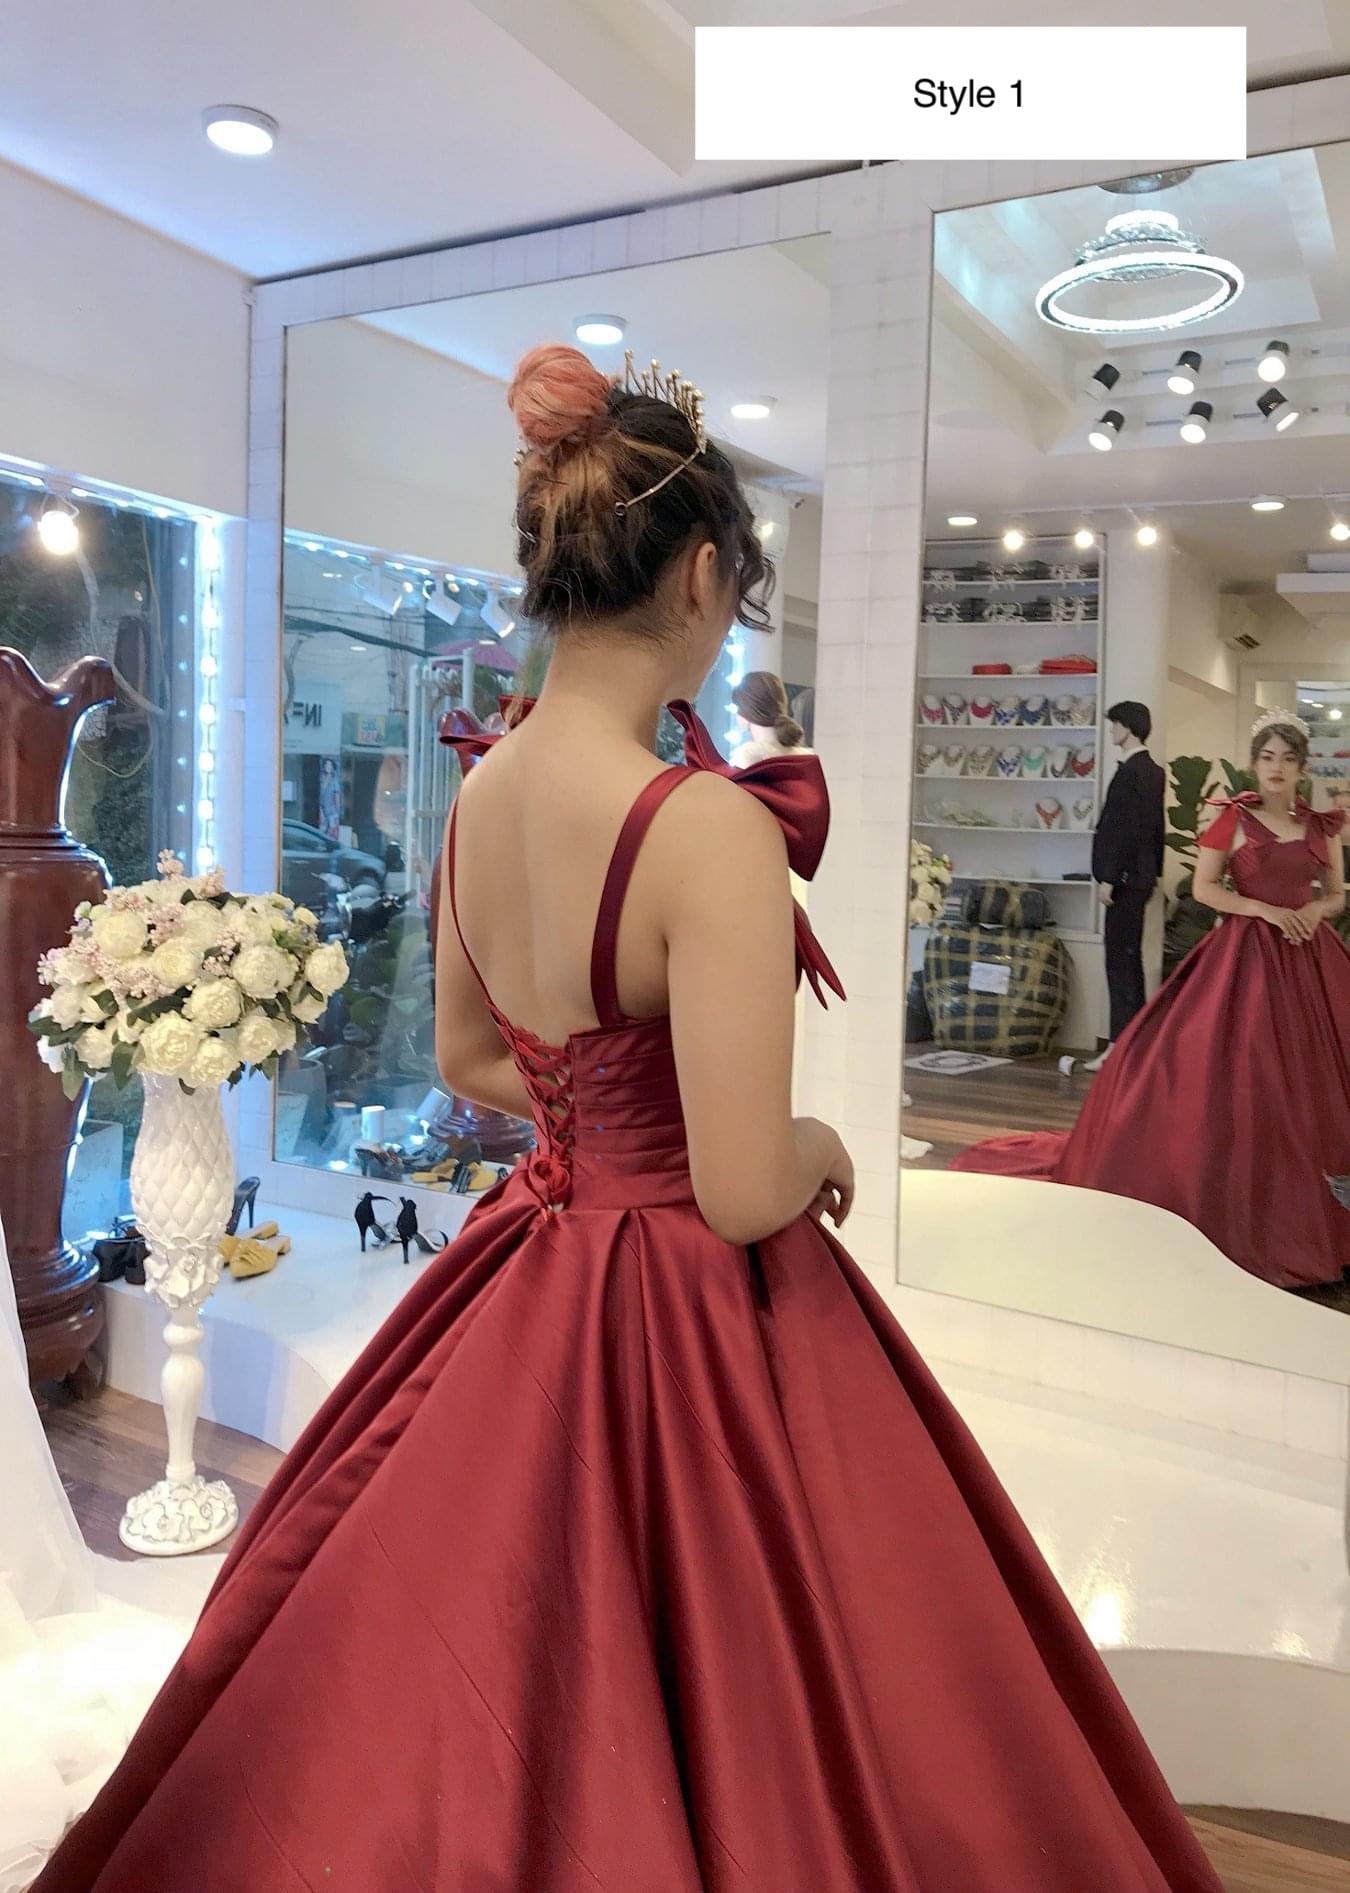 Red Gown For Bride|Shop Online | Red gown dress, Bridal dress design,  Indian wedding dress designers